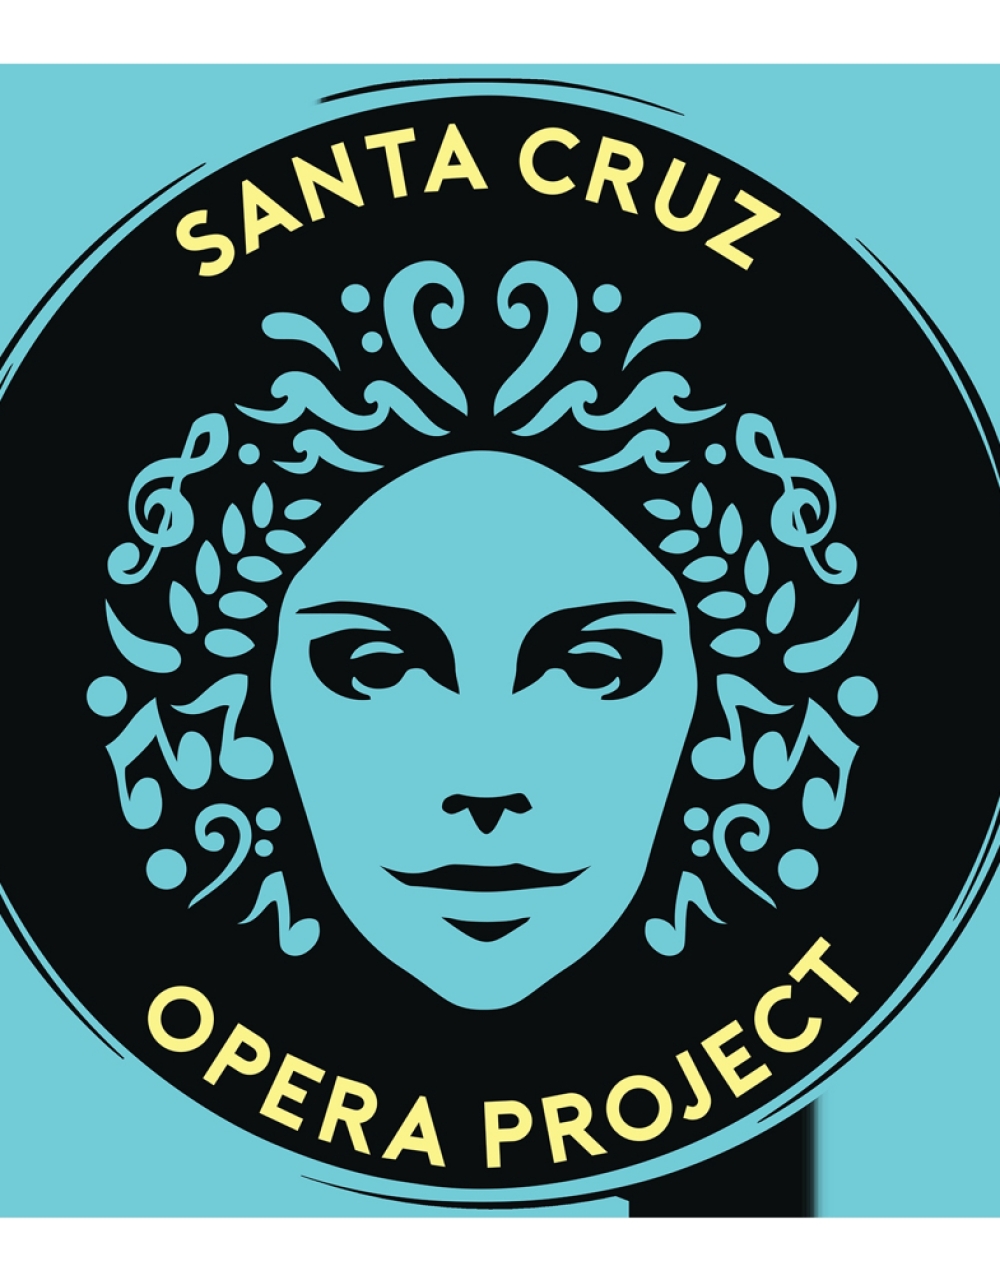 La Bohème - Santa Cruz Opera Project Stage Mag